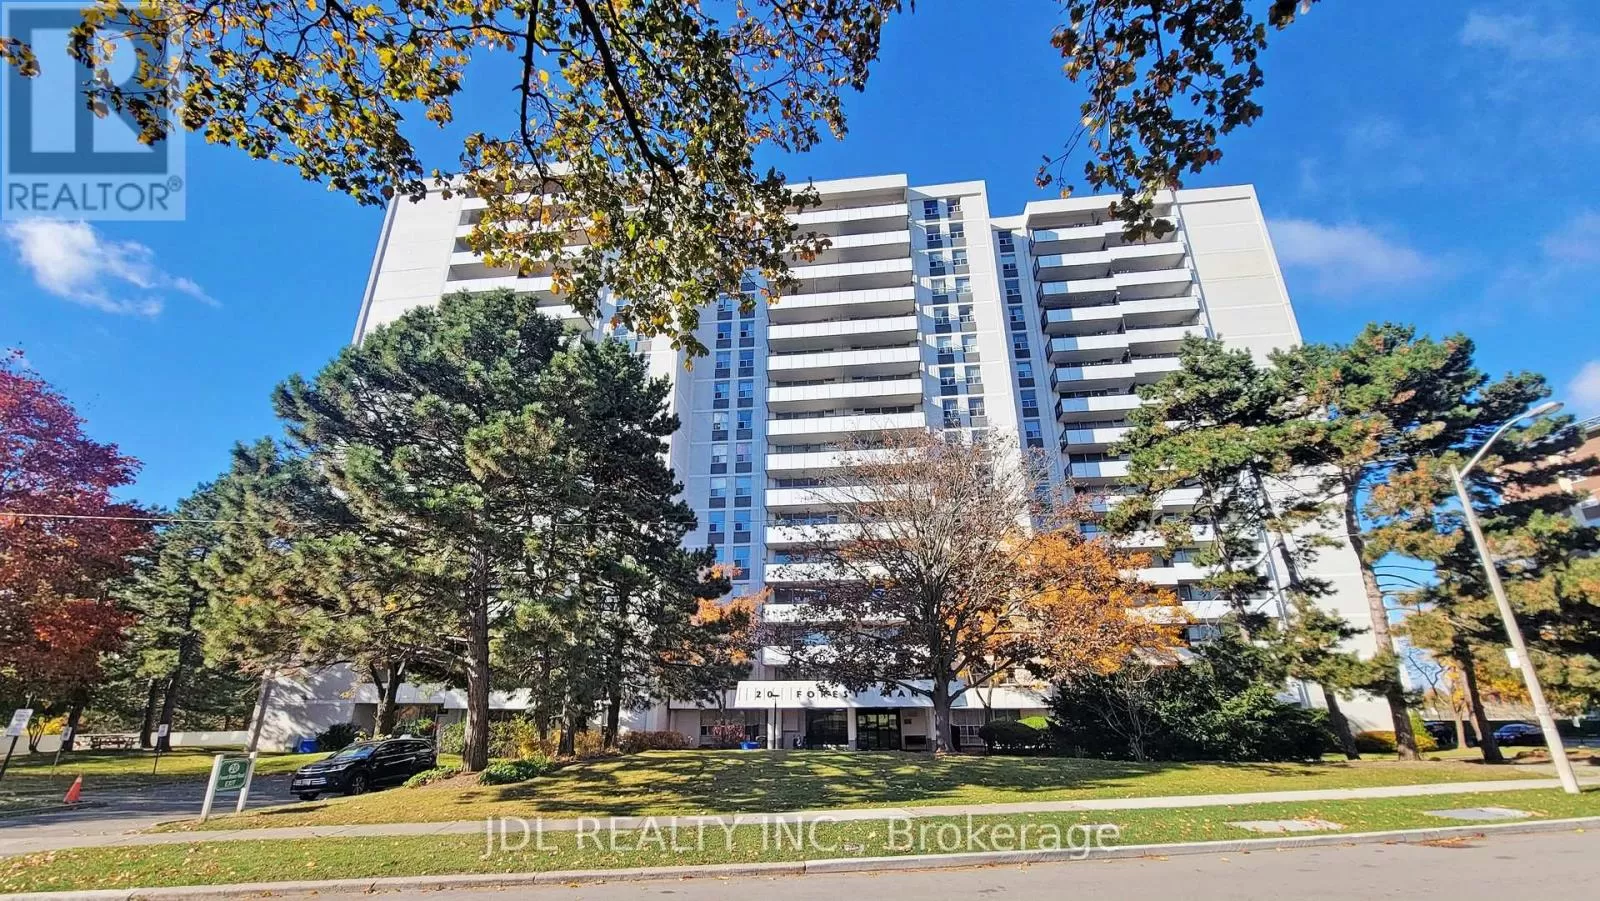 Apartment for rent: 111 - 20 Forest Manor Road, Toronto, Ontario M2J 1M2